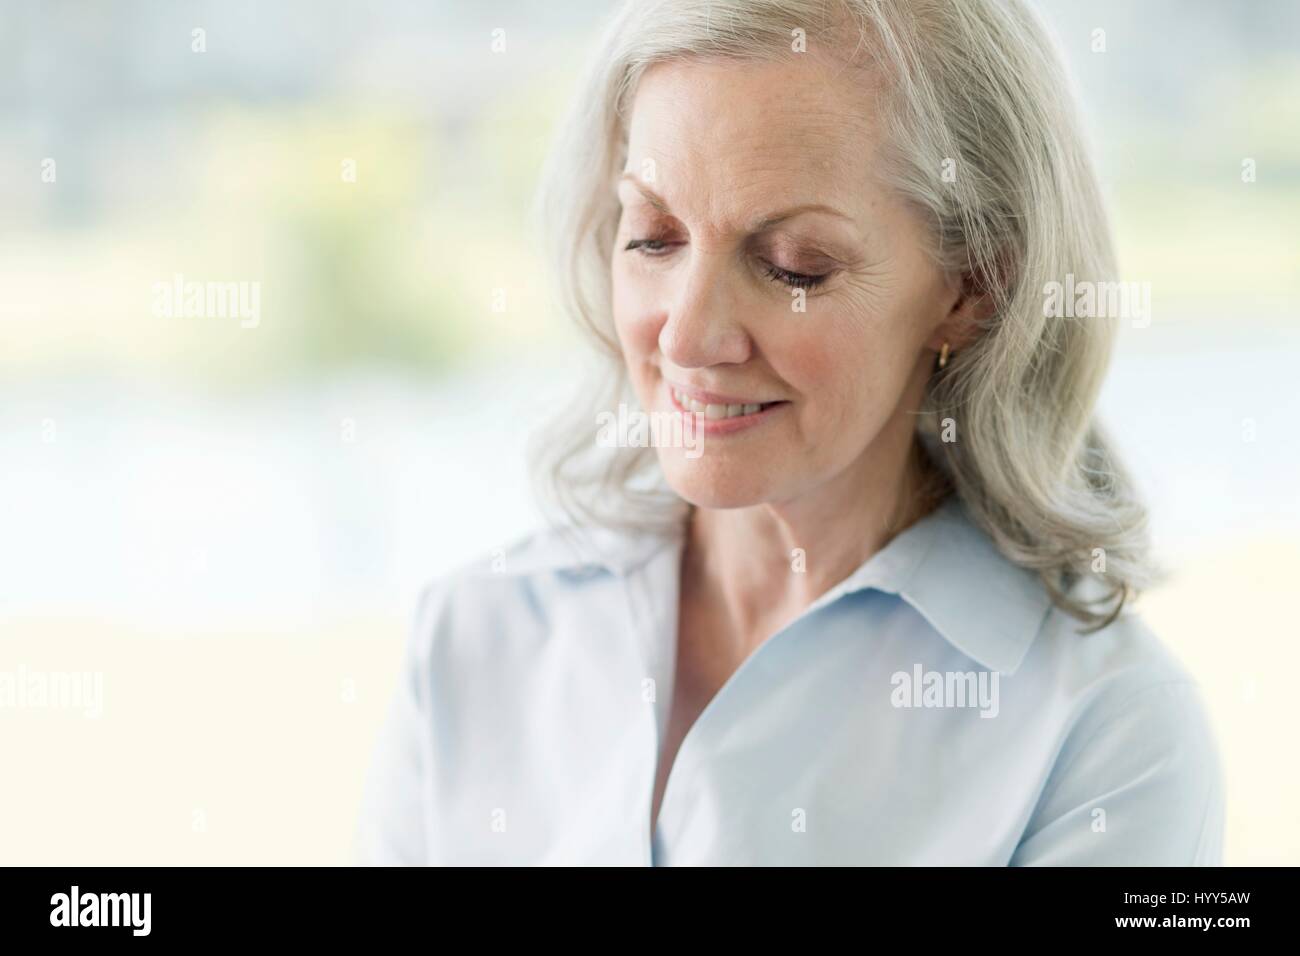 Senior woman smiling, portrait. Stock Photo